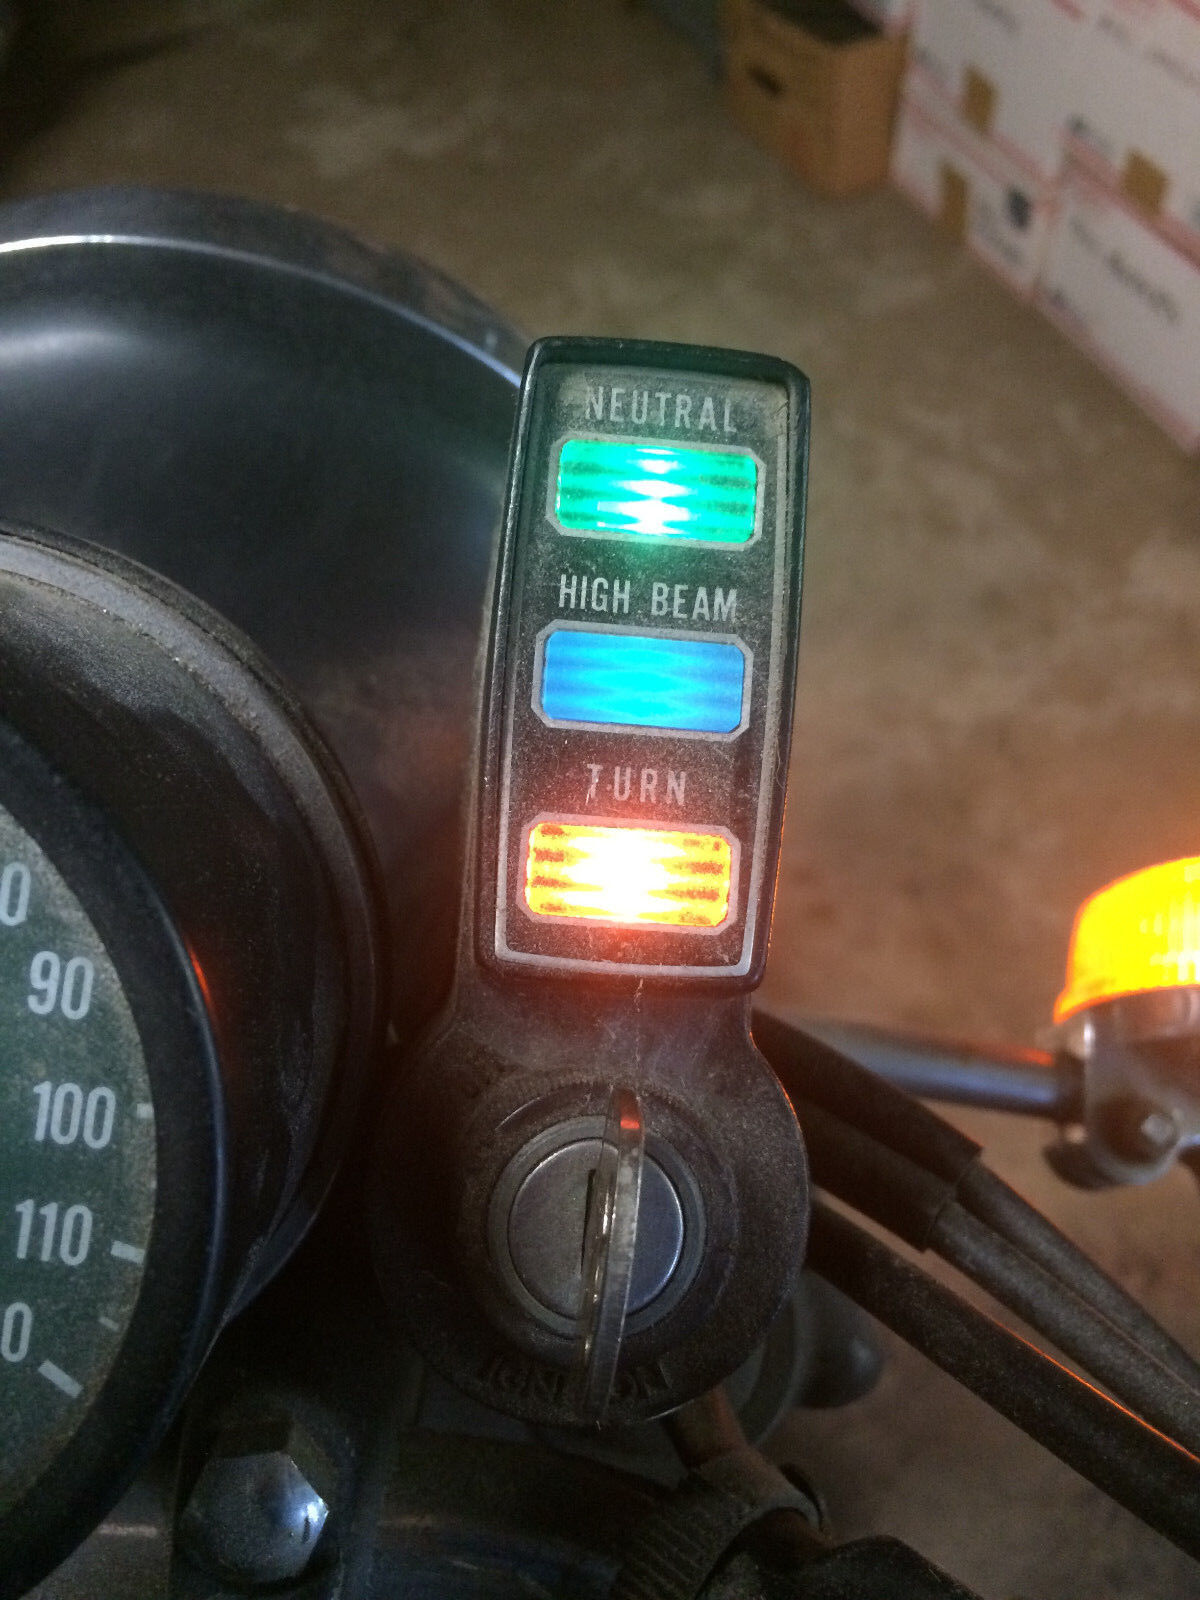 OEM indicator panel from 1977 KAWASAKI KZ400 motorcycle